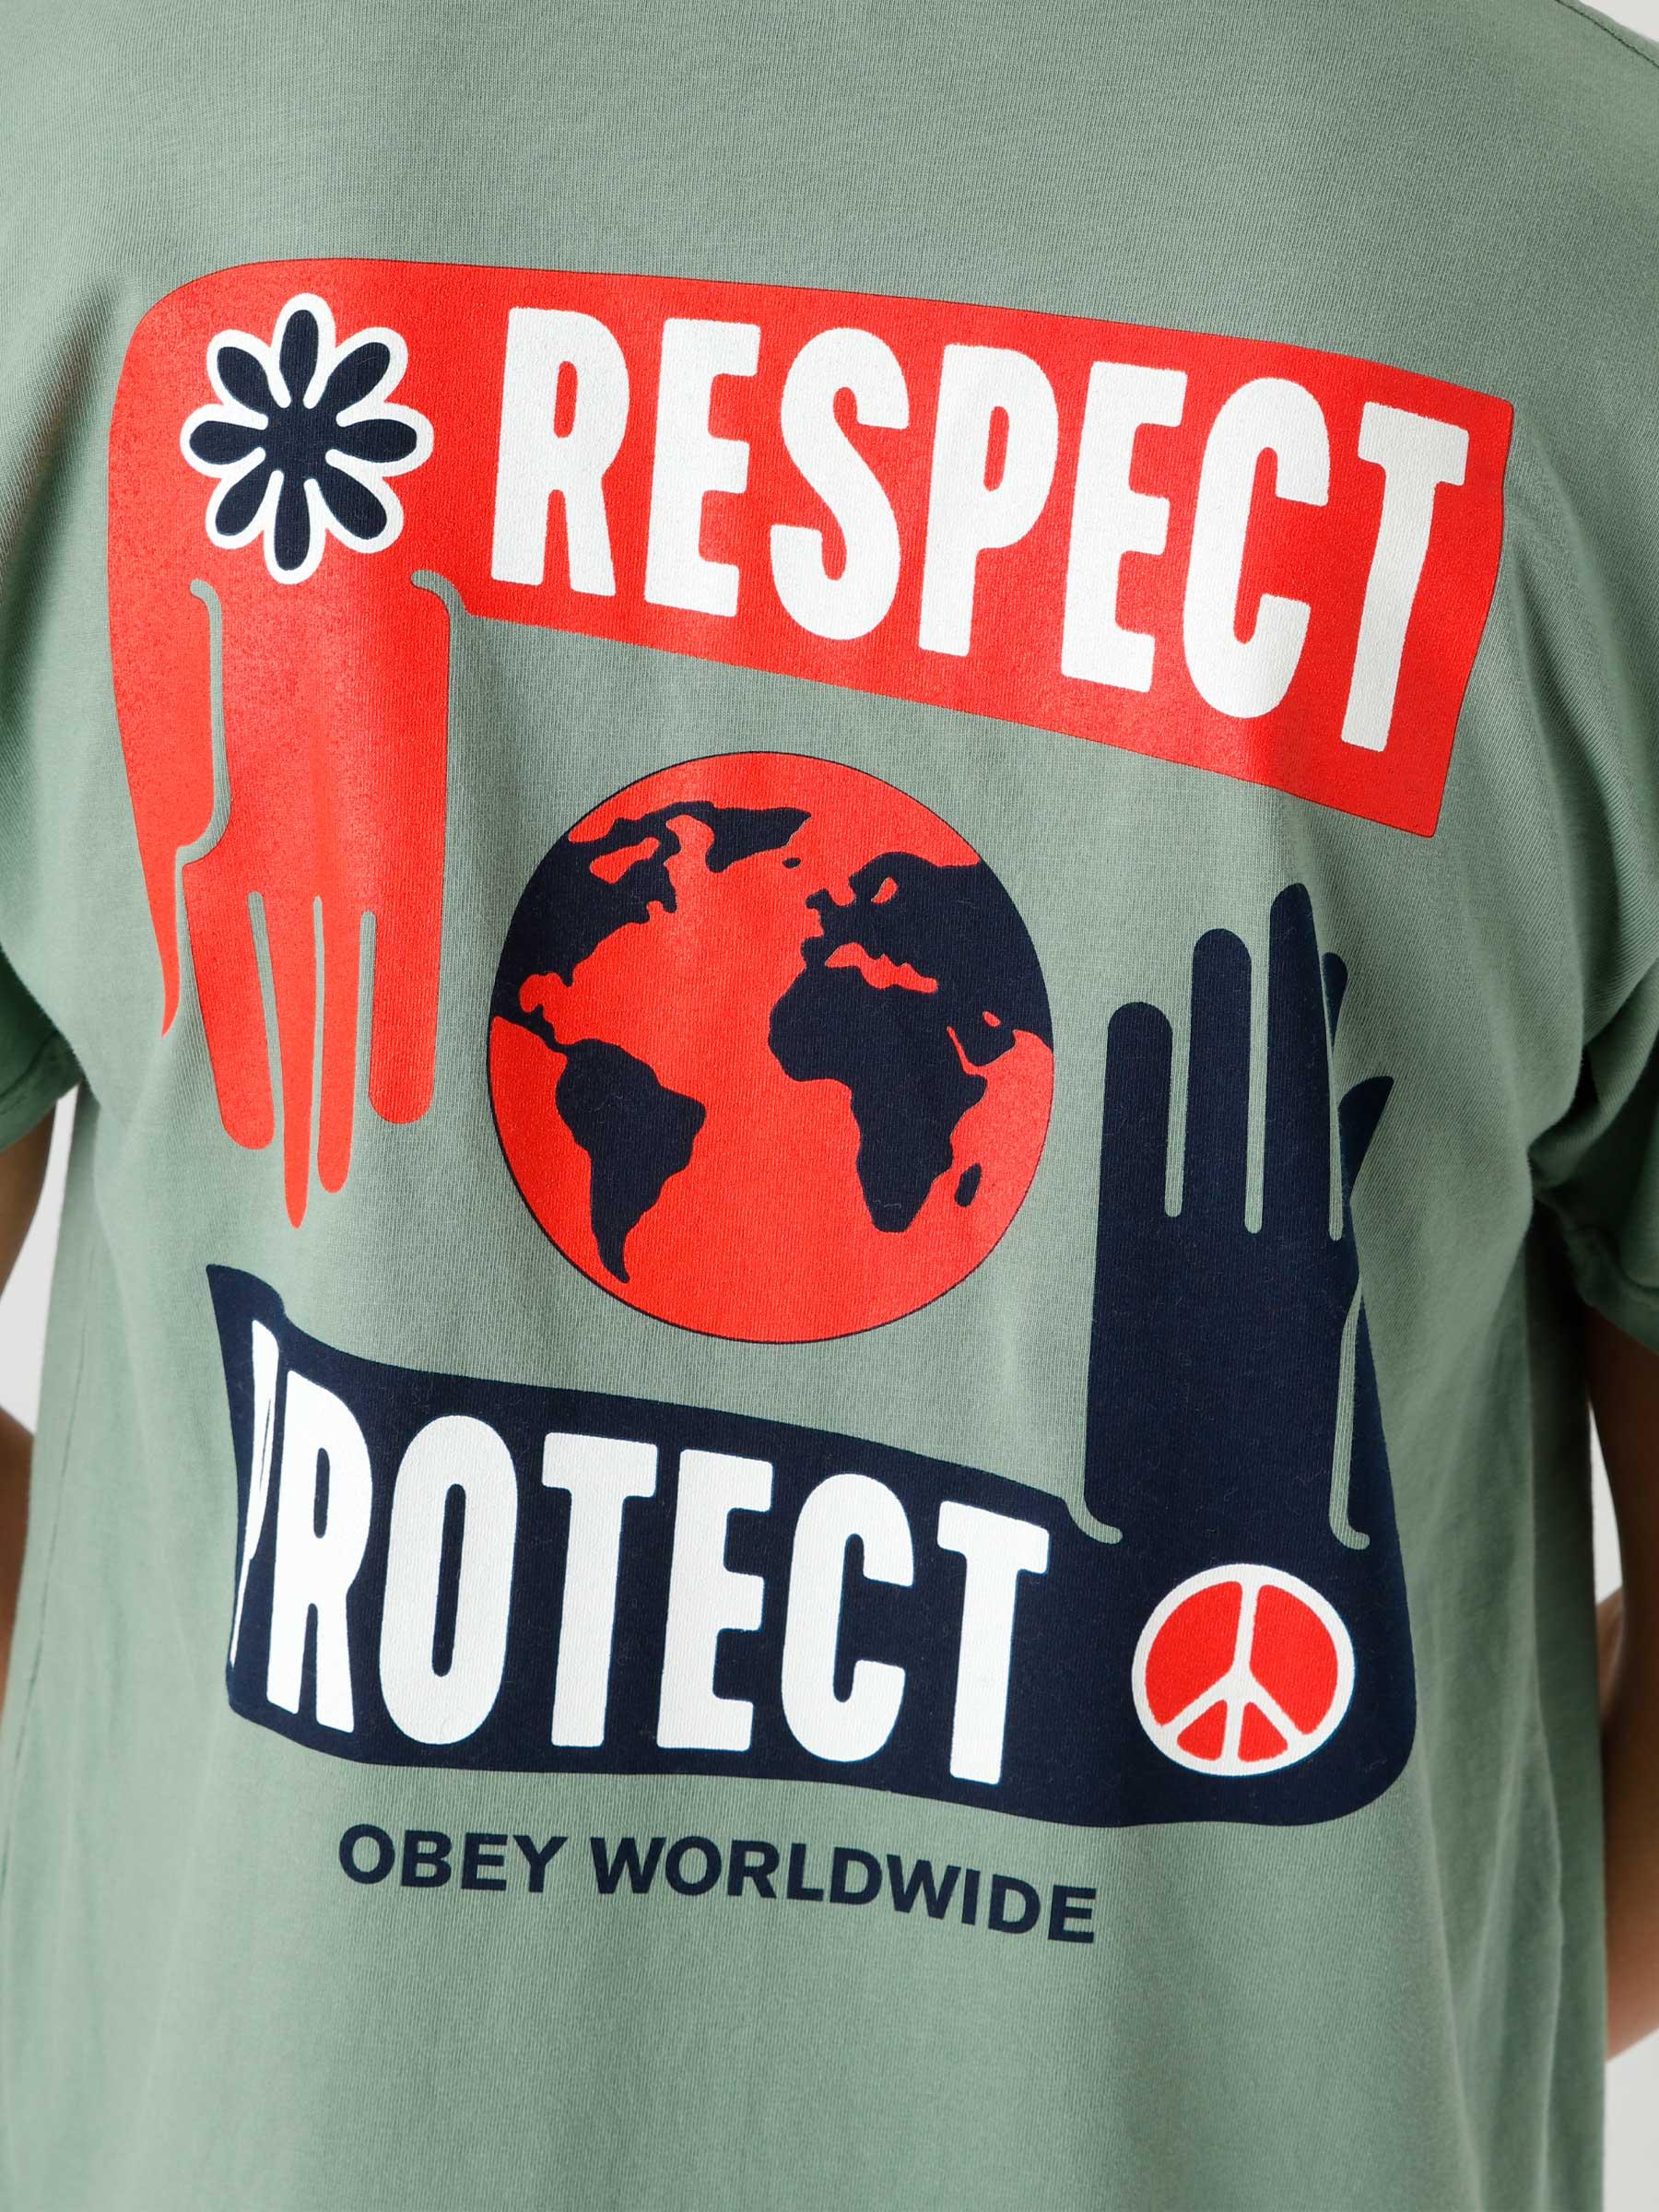 Respect Protect T-shirt Wavelite 163003089